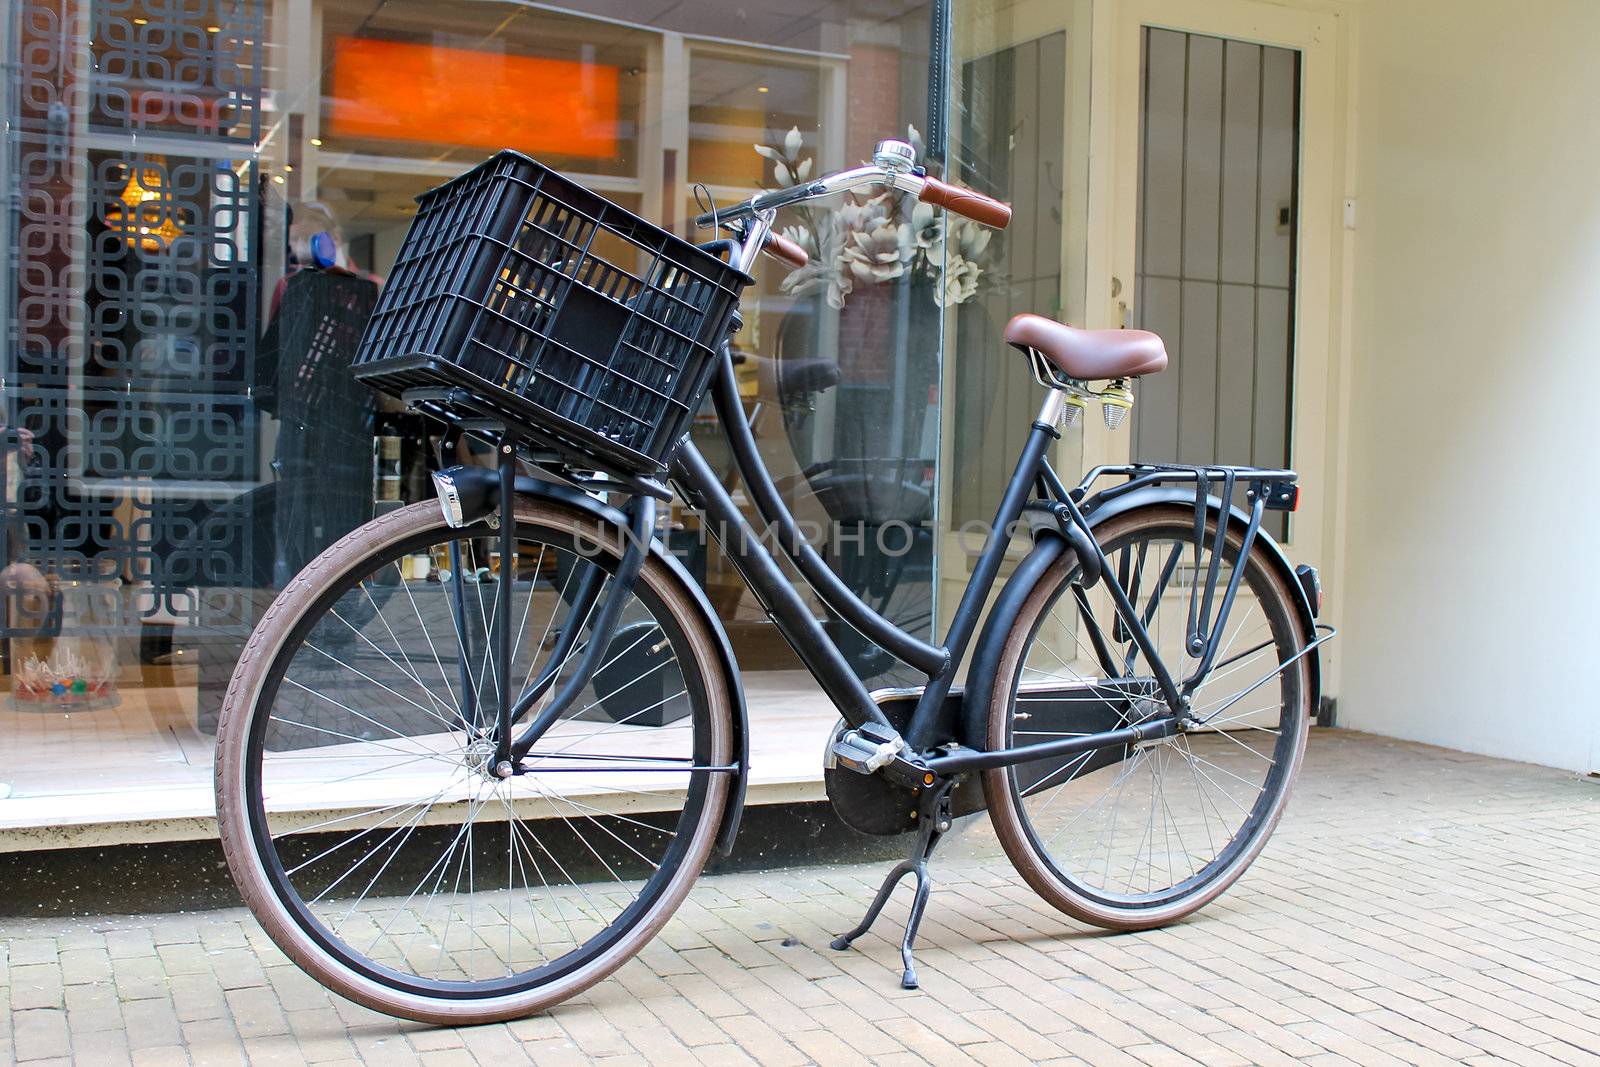 Bicycle near the store. Gorinchem. Netherlands by NickNick